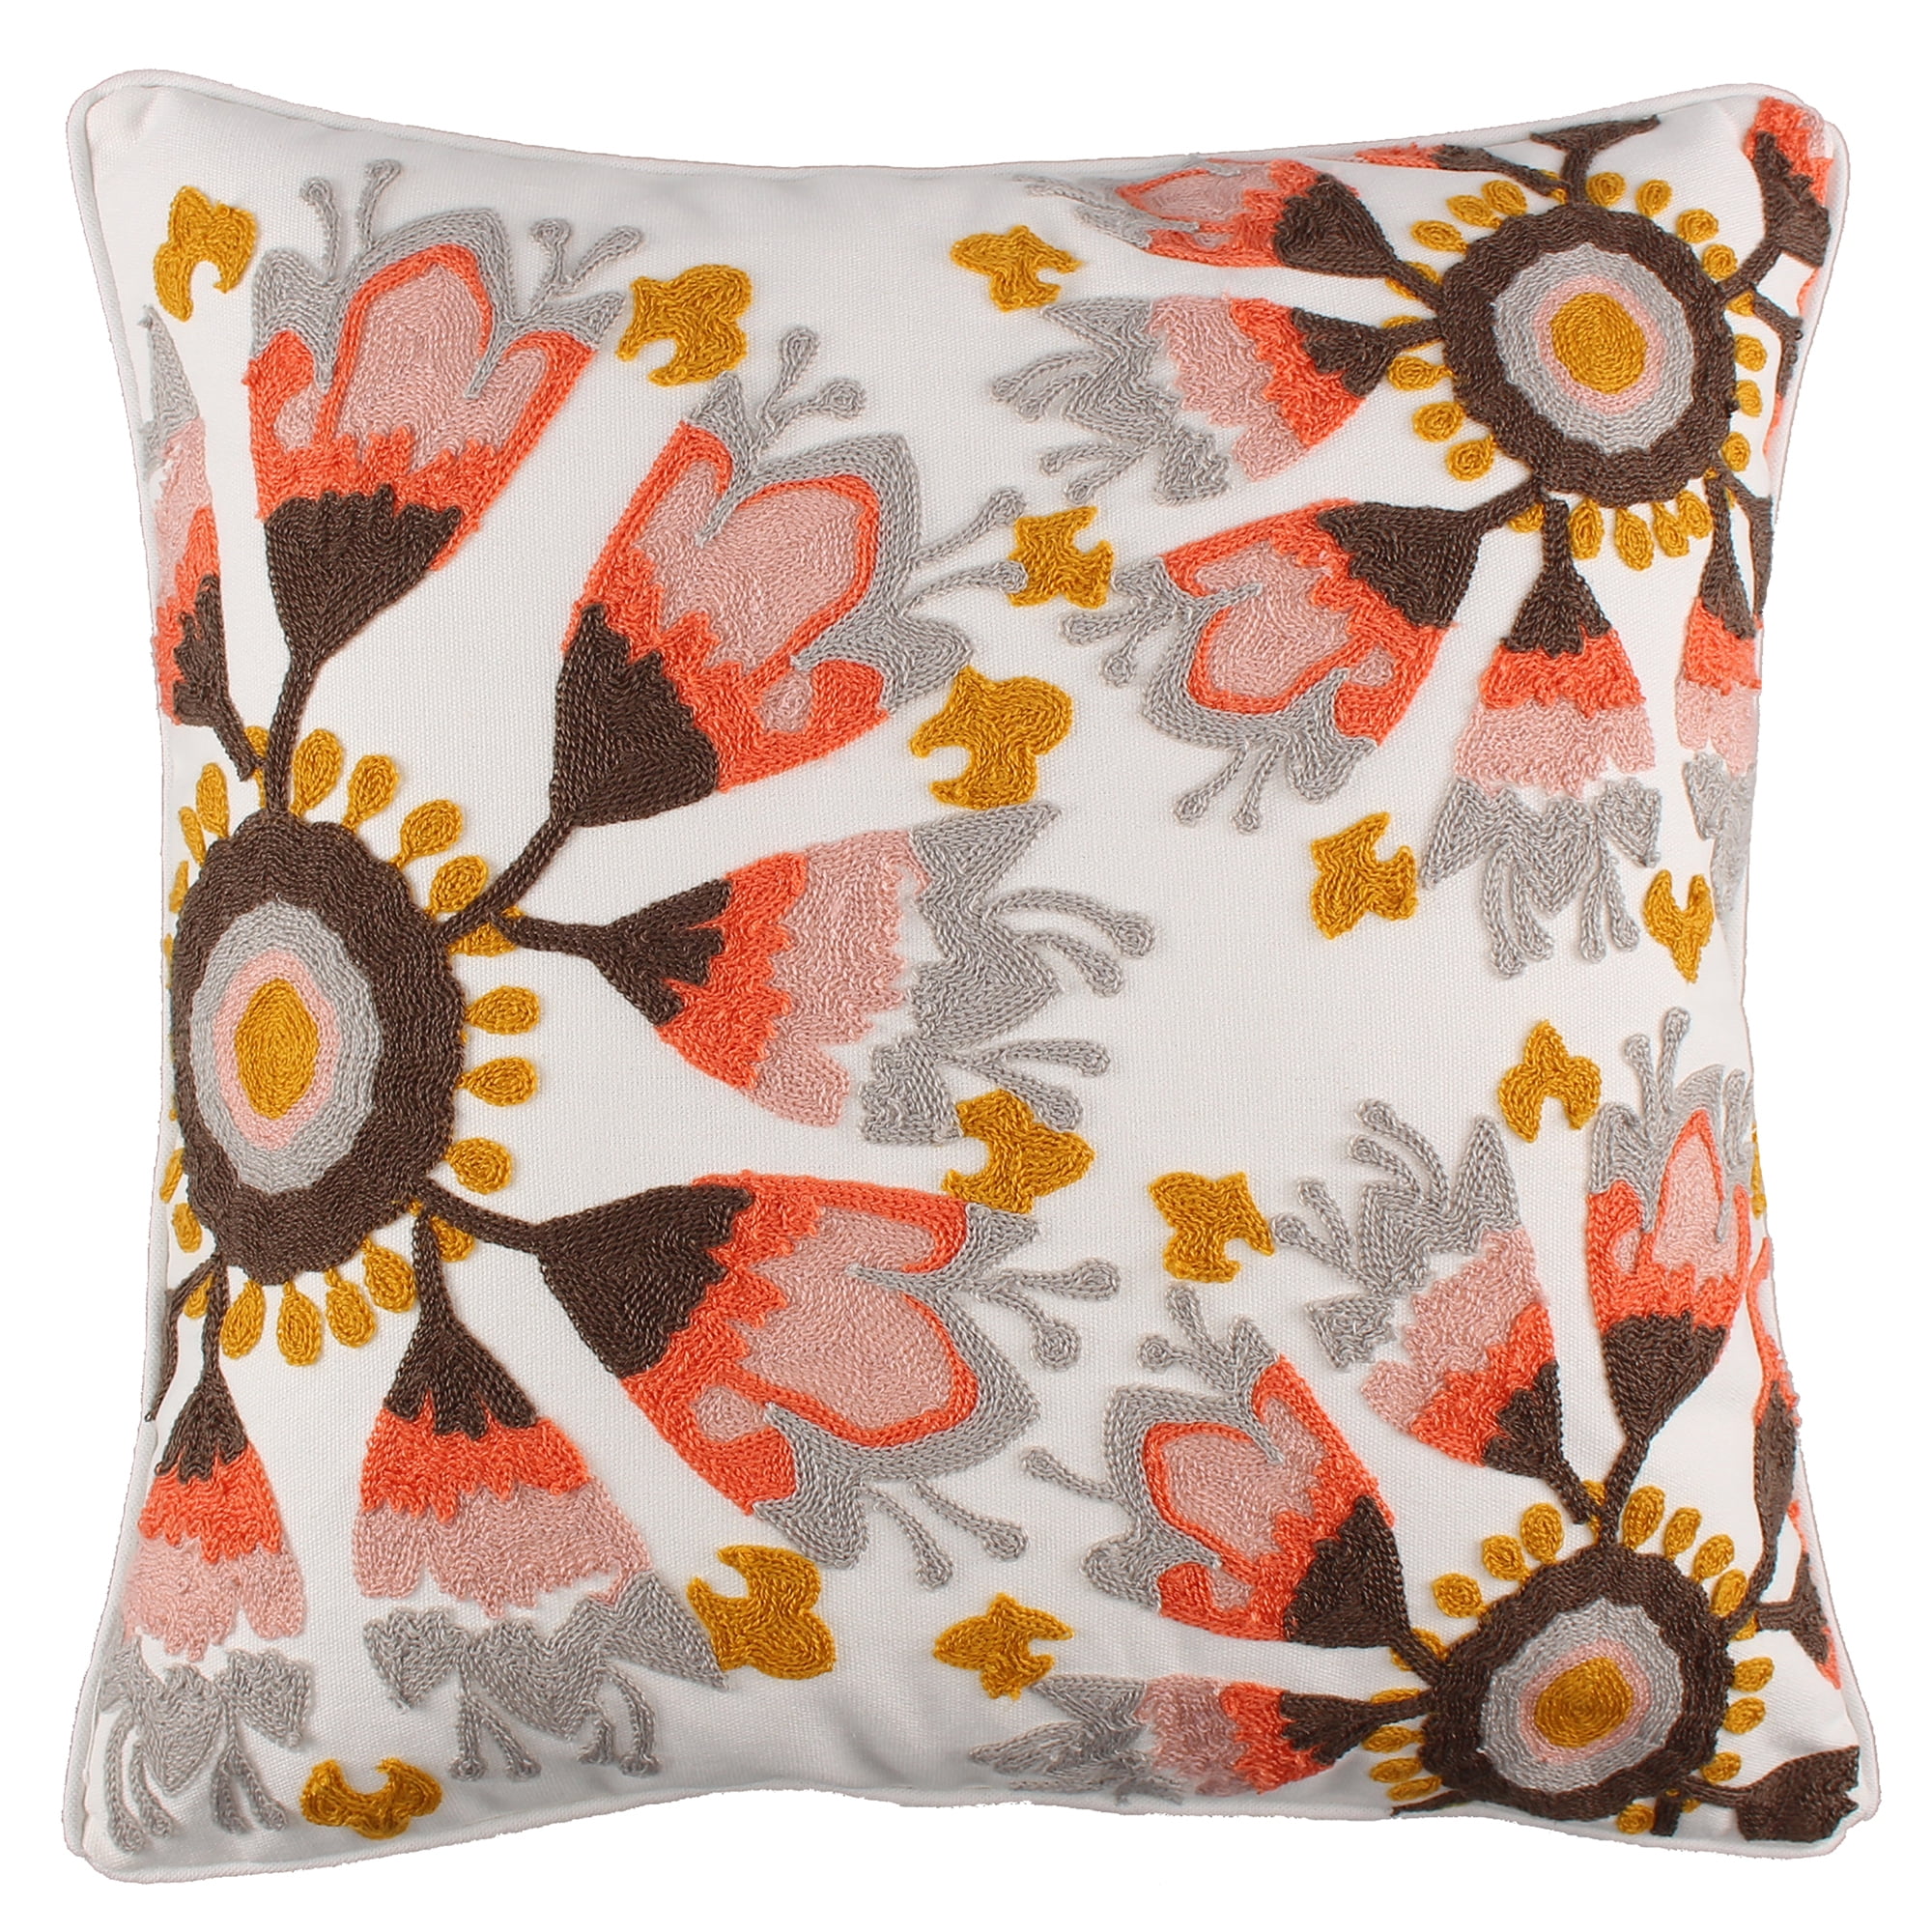 Details about   Pottery Barn "Orange Floral" 20" Linen Pillow Cover 